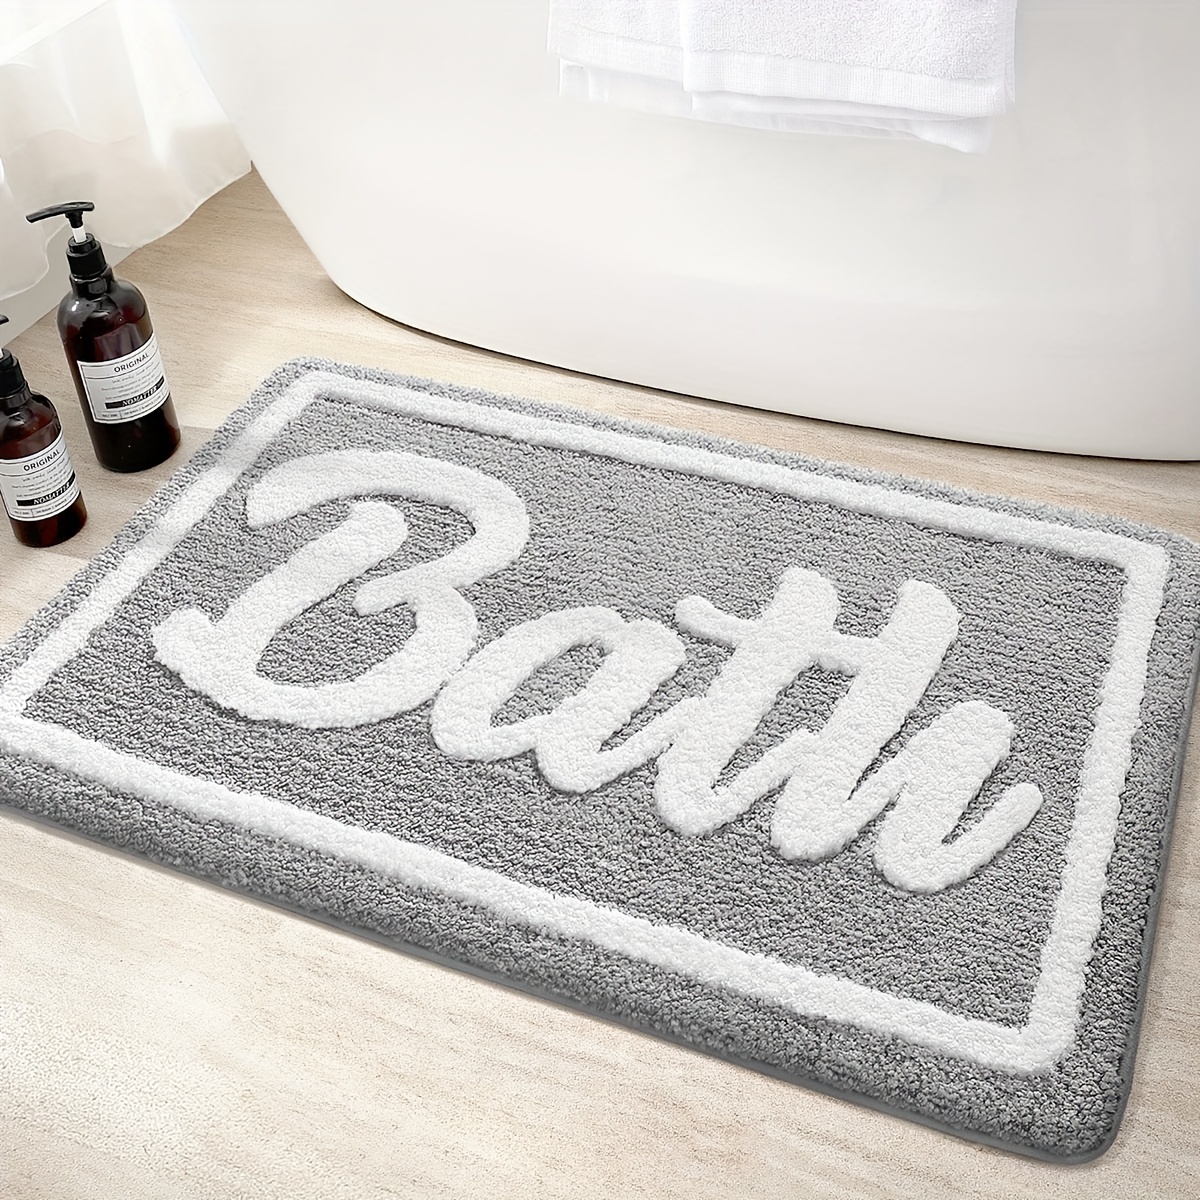 Kitinjoy Luxury Bathroom Rug Mat, Ultra Soft Water Absorbent Microfiber  Bath Rug, Non Slip Plush Shaggy Bath Carpet, Machine Wash Dry, Bath Mats  for